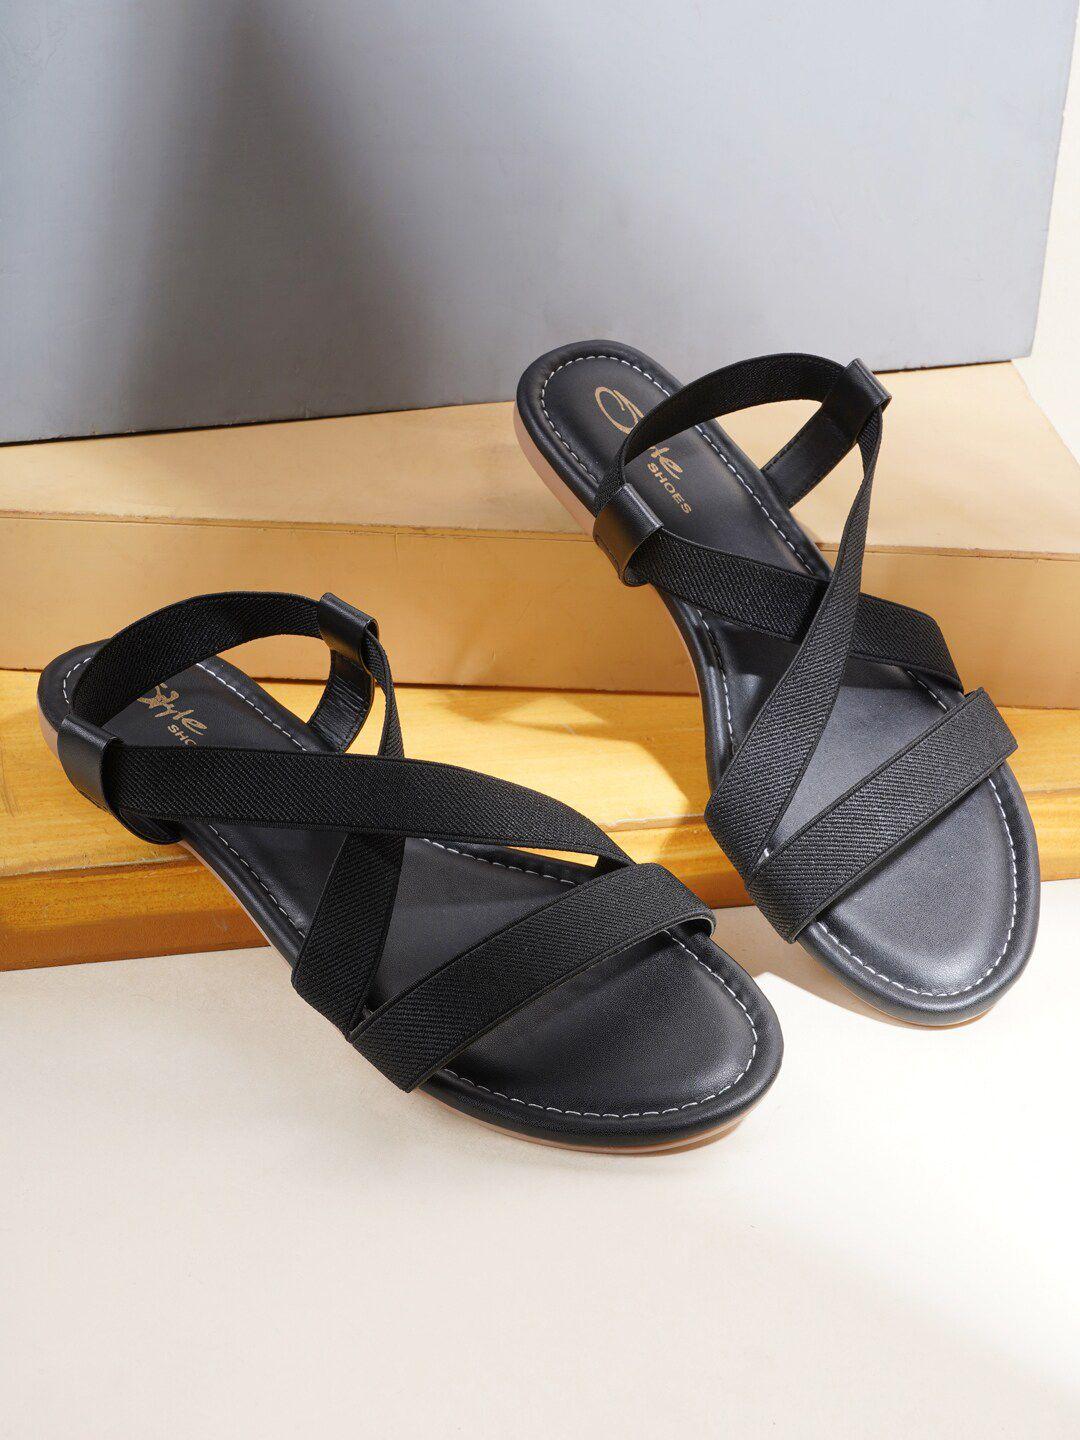 style shoes women black solid open toe flats